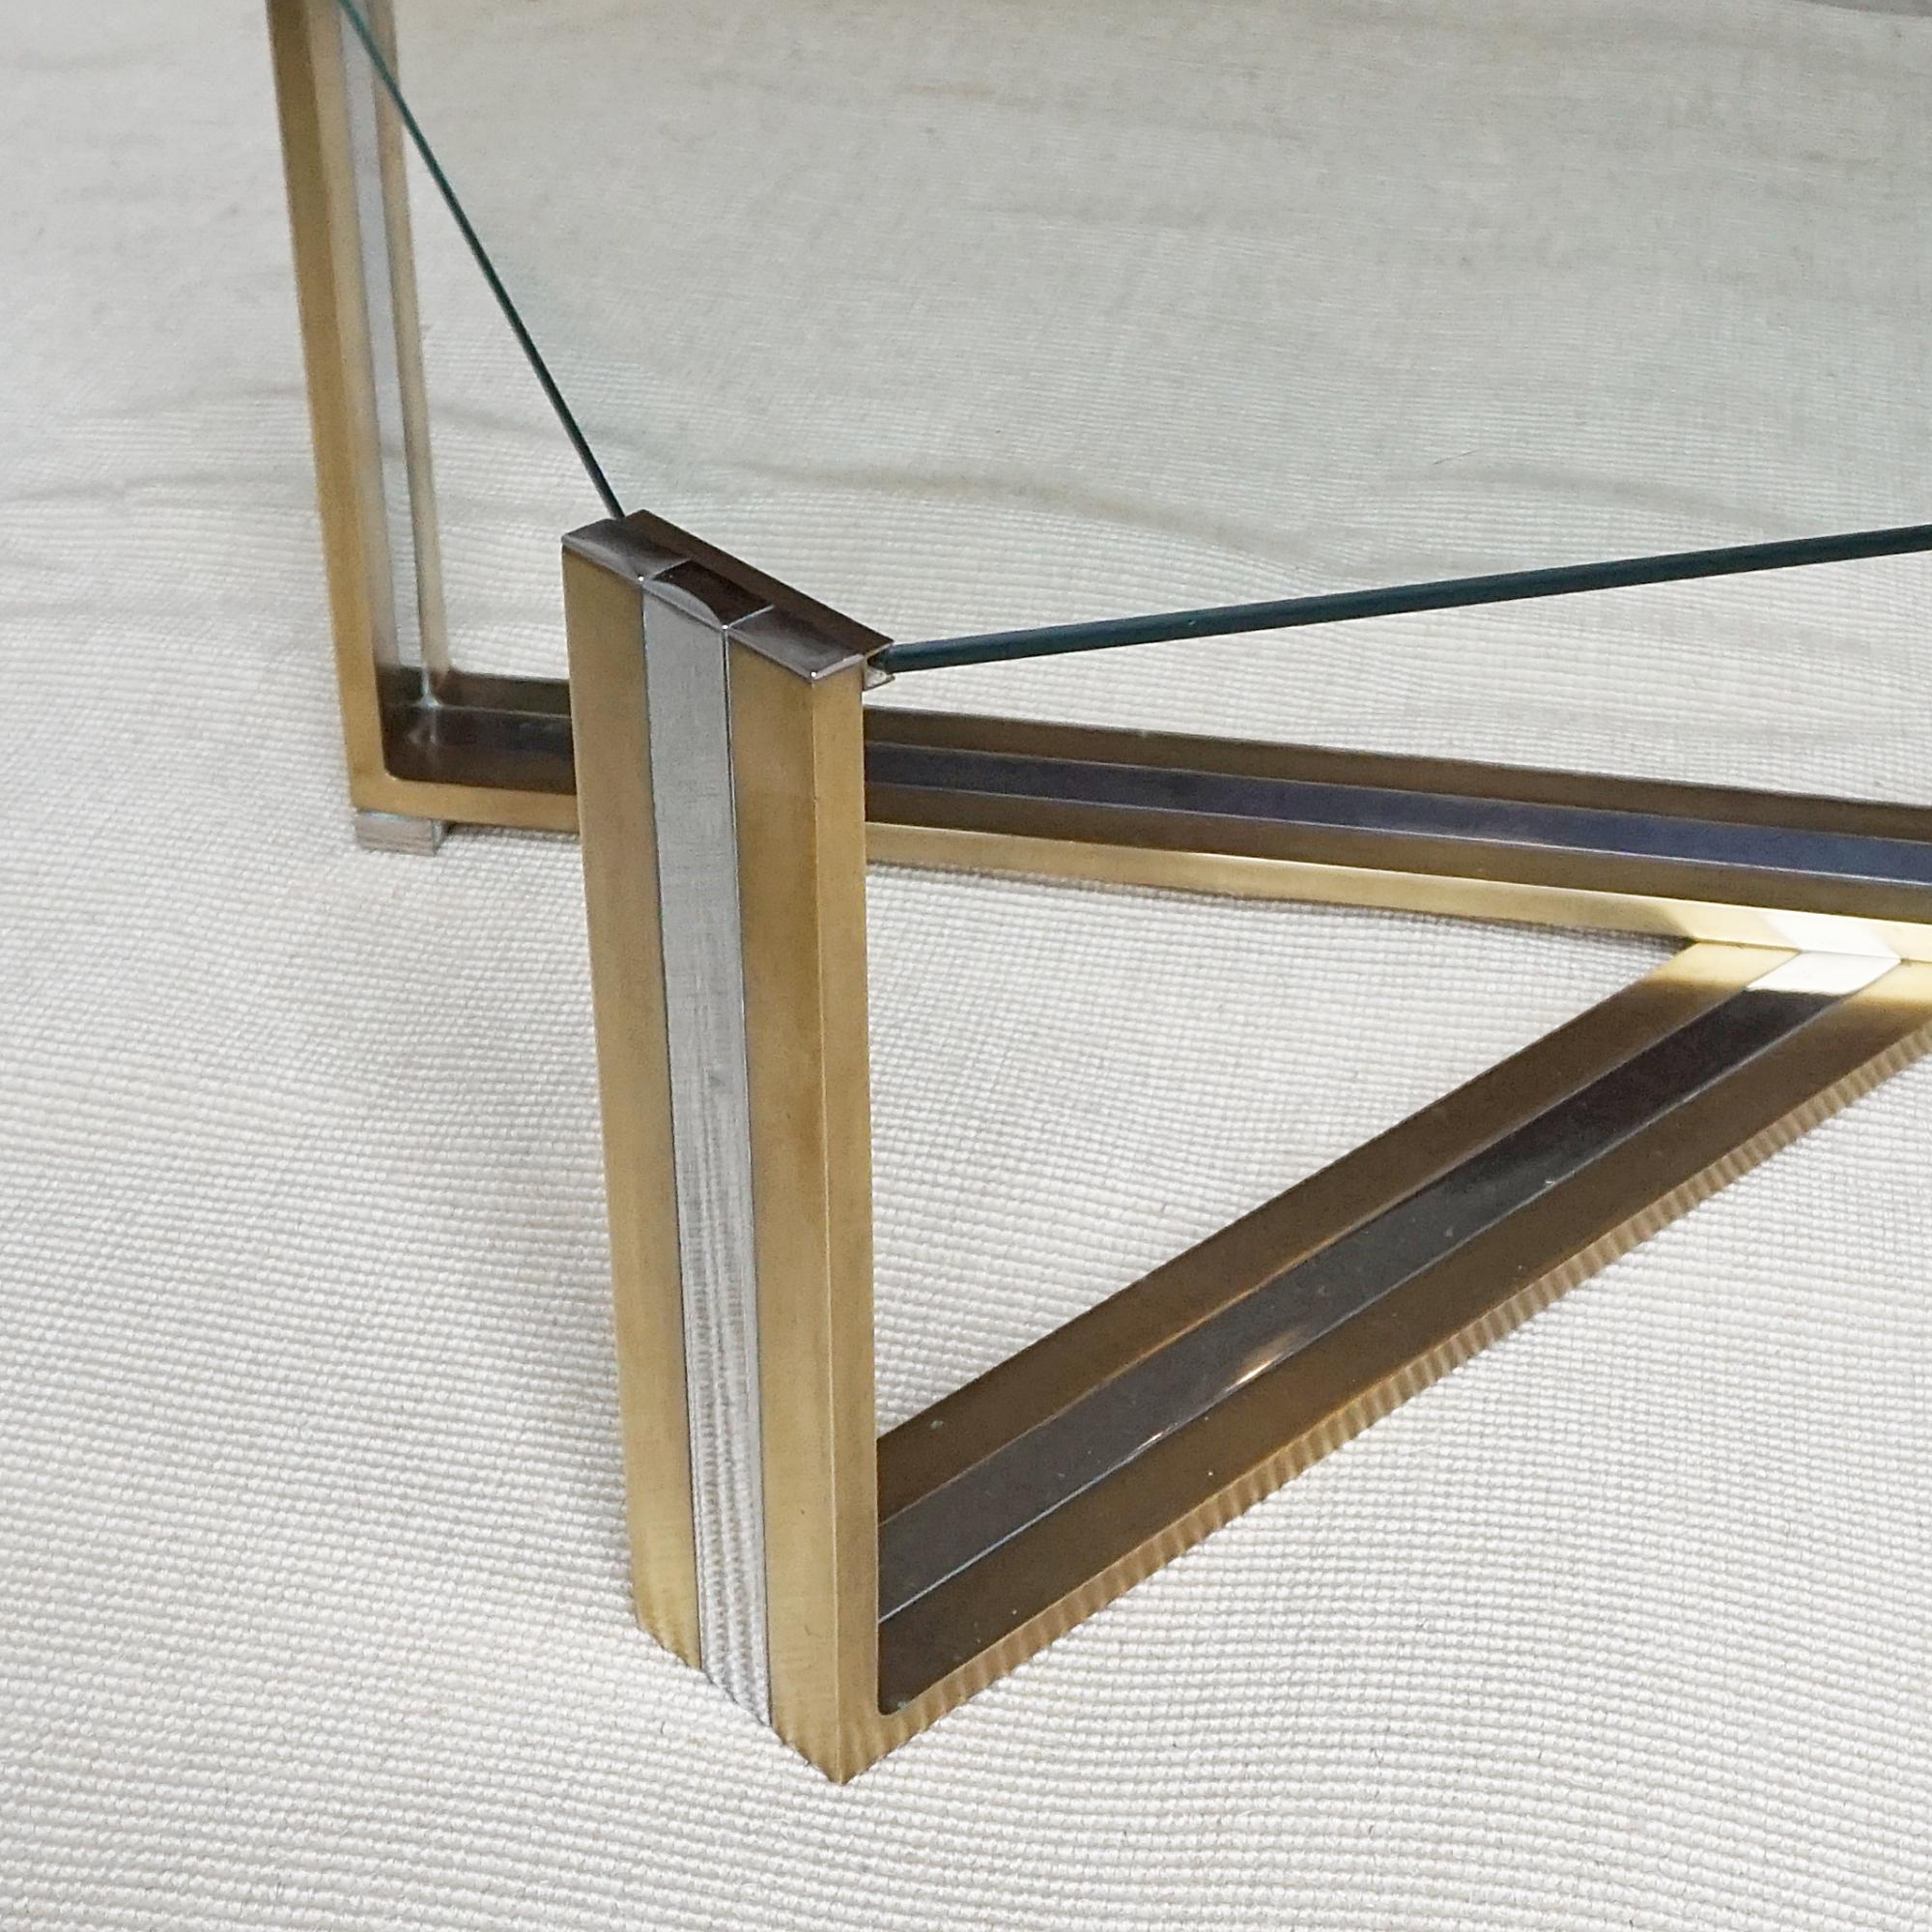 Italian Modernist 1970's X-Frame Coffee Table by Romeo Rega (1925-1981)